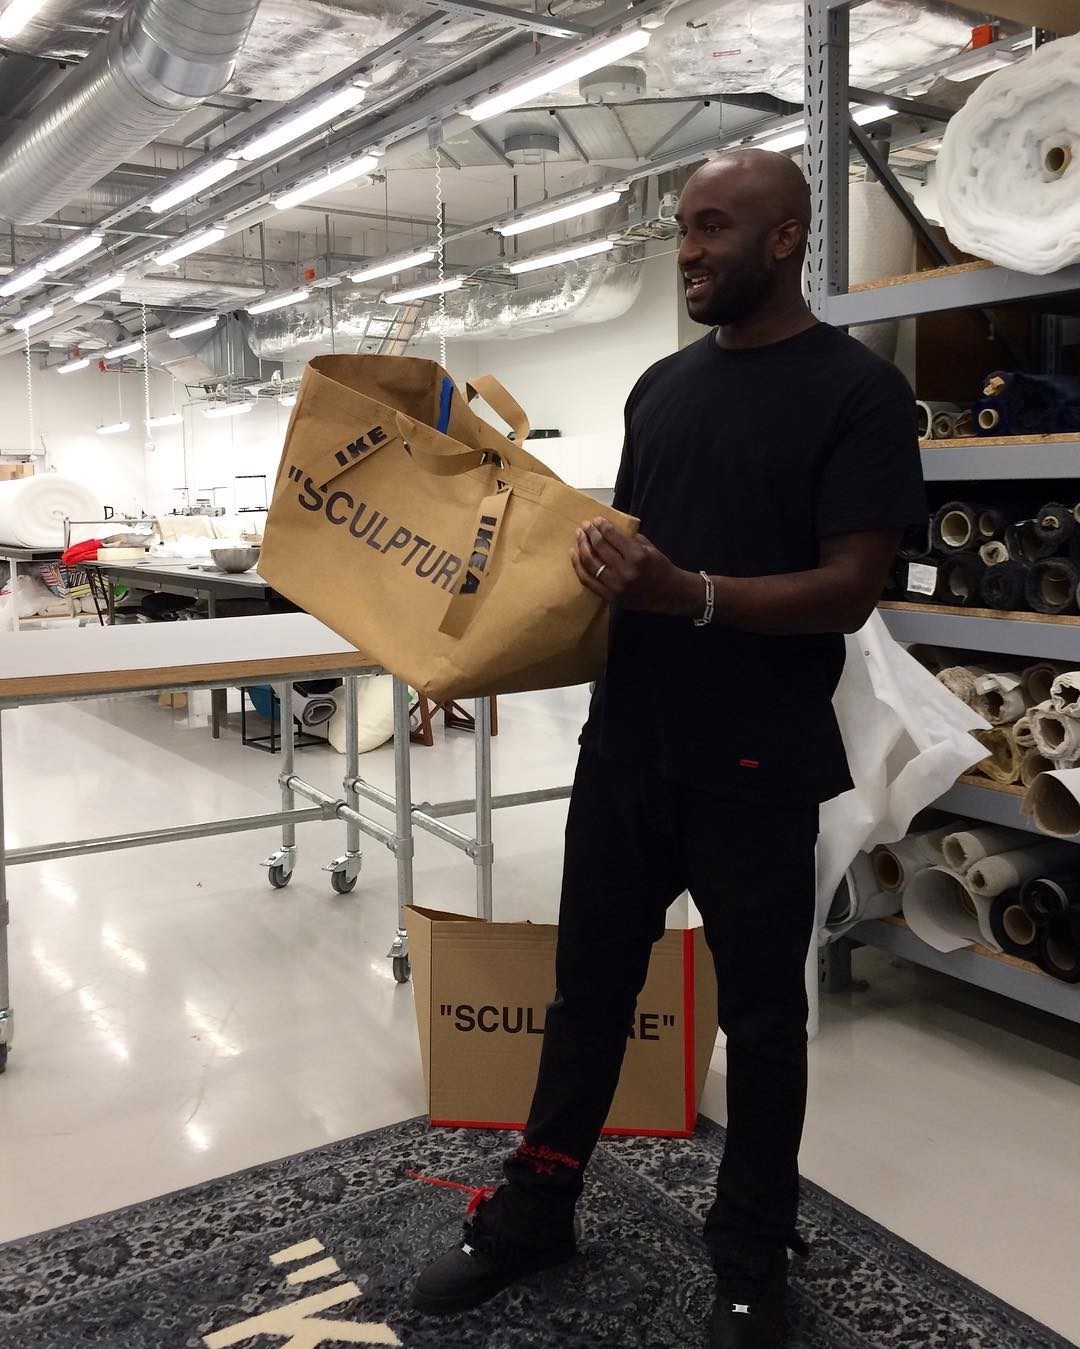 PAUSE Hightlights: IKEA x Virgil Abloh “SCULPTURE” Bag – PAUSE